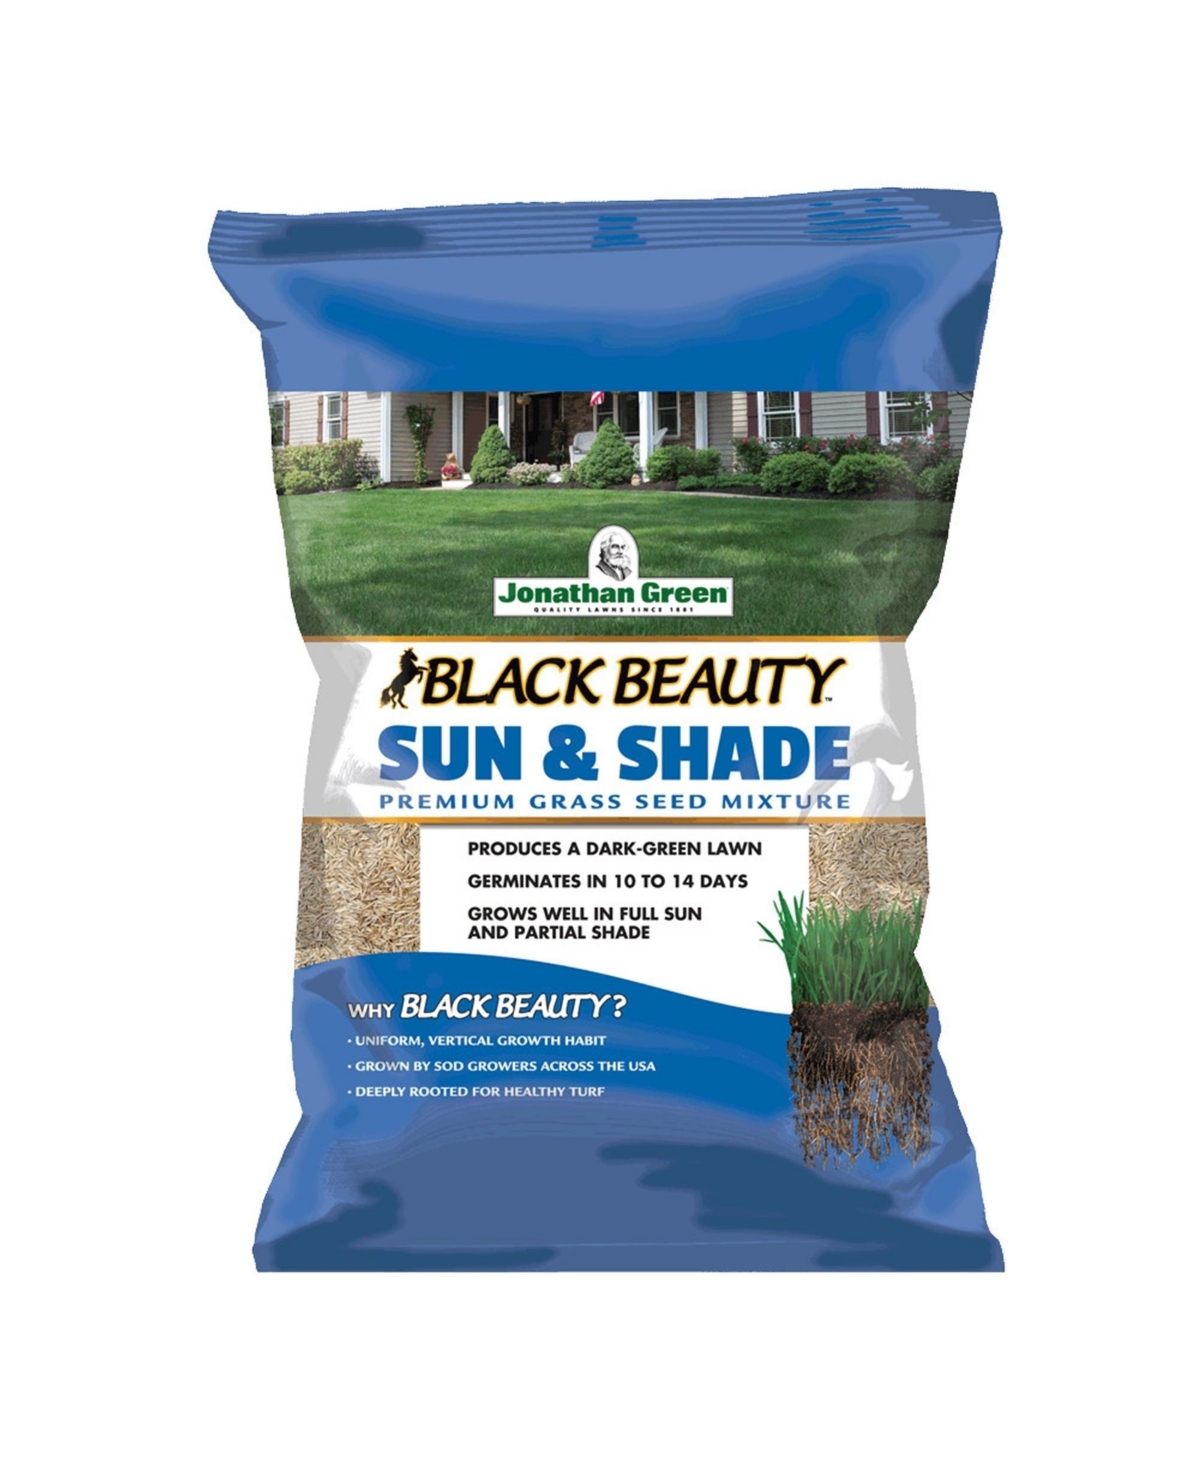 (#12004) Black Beauty Sun & Shade Grass Seed, 15lb bag - Brown